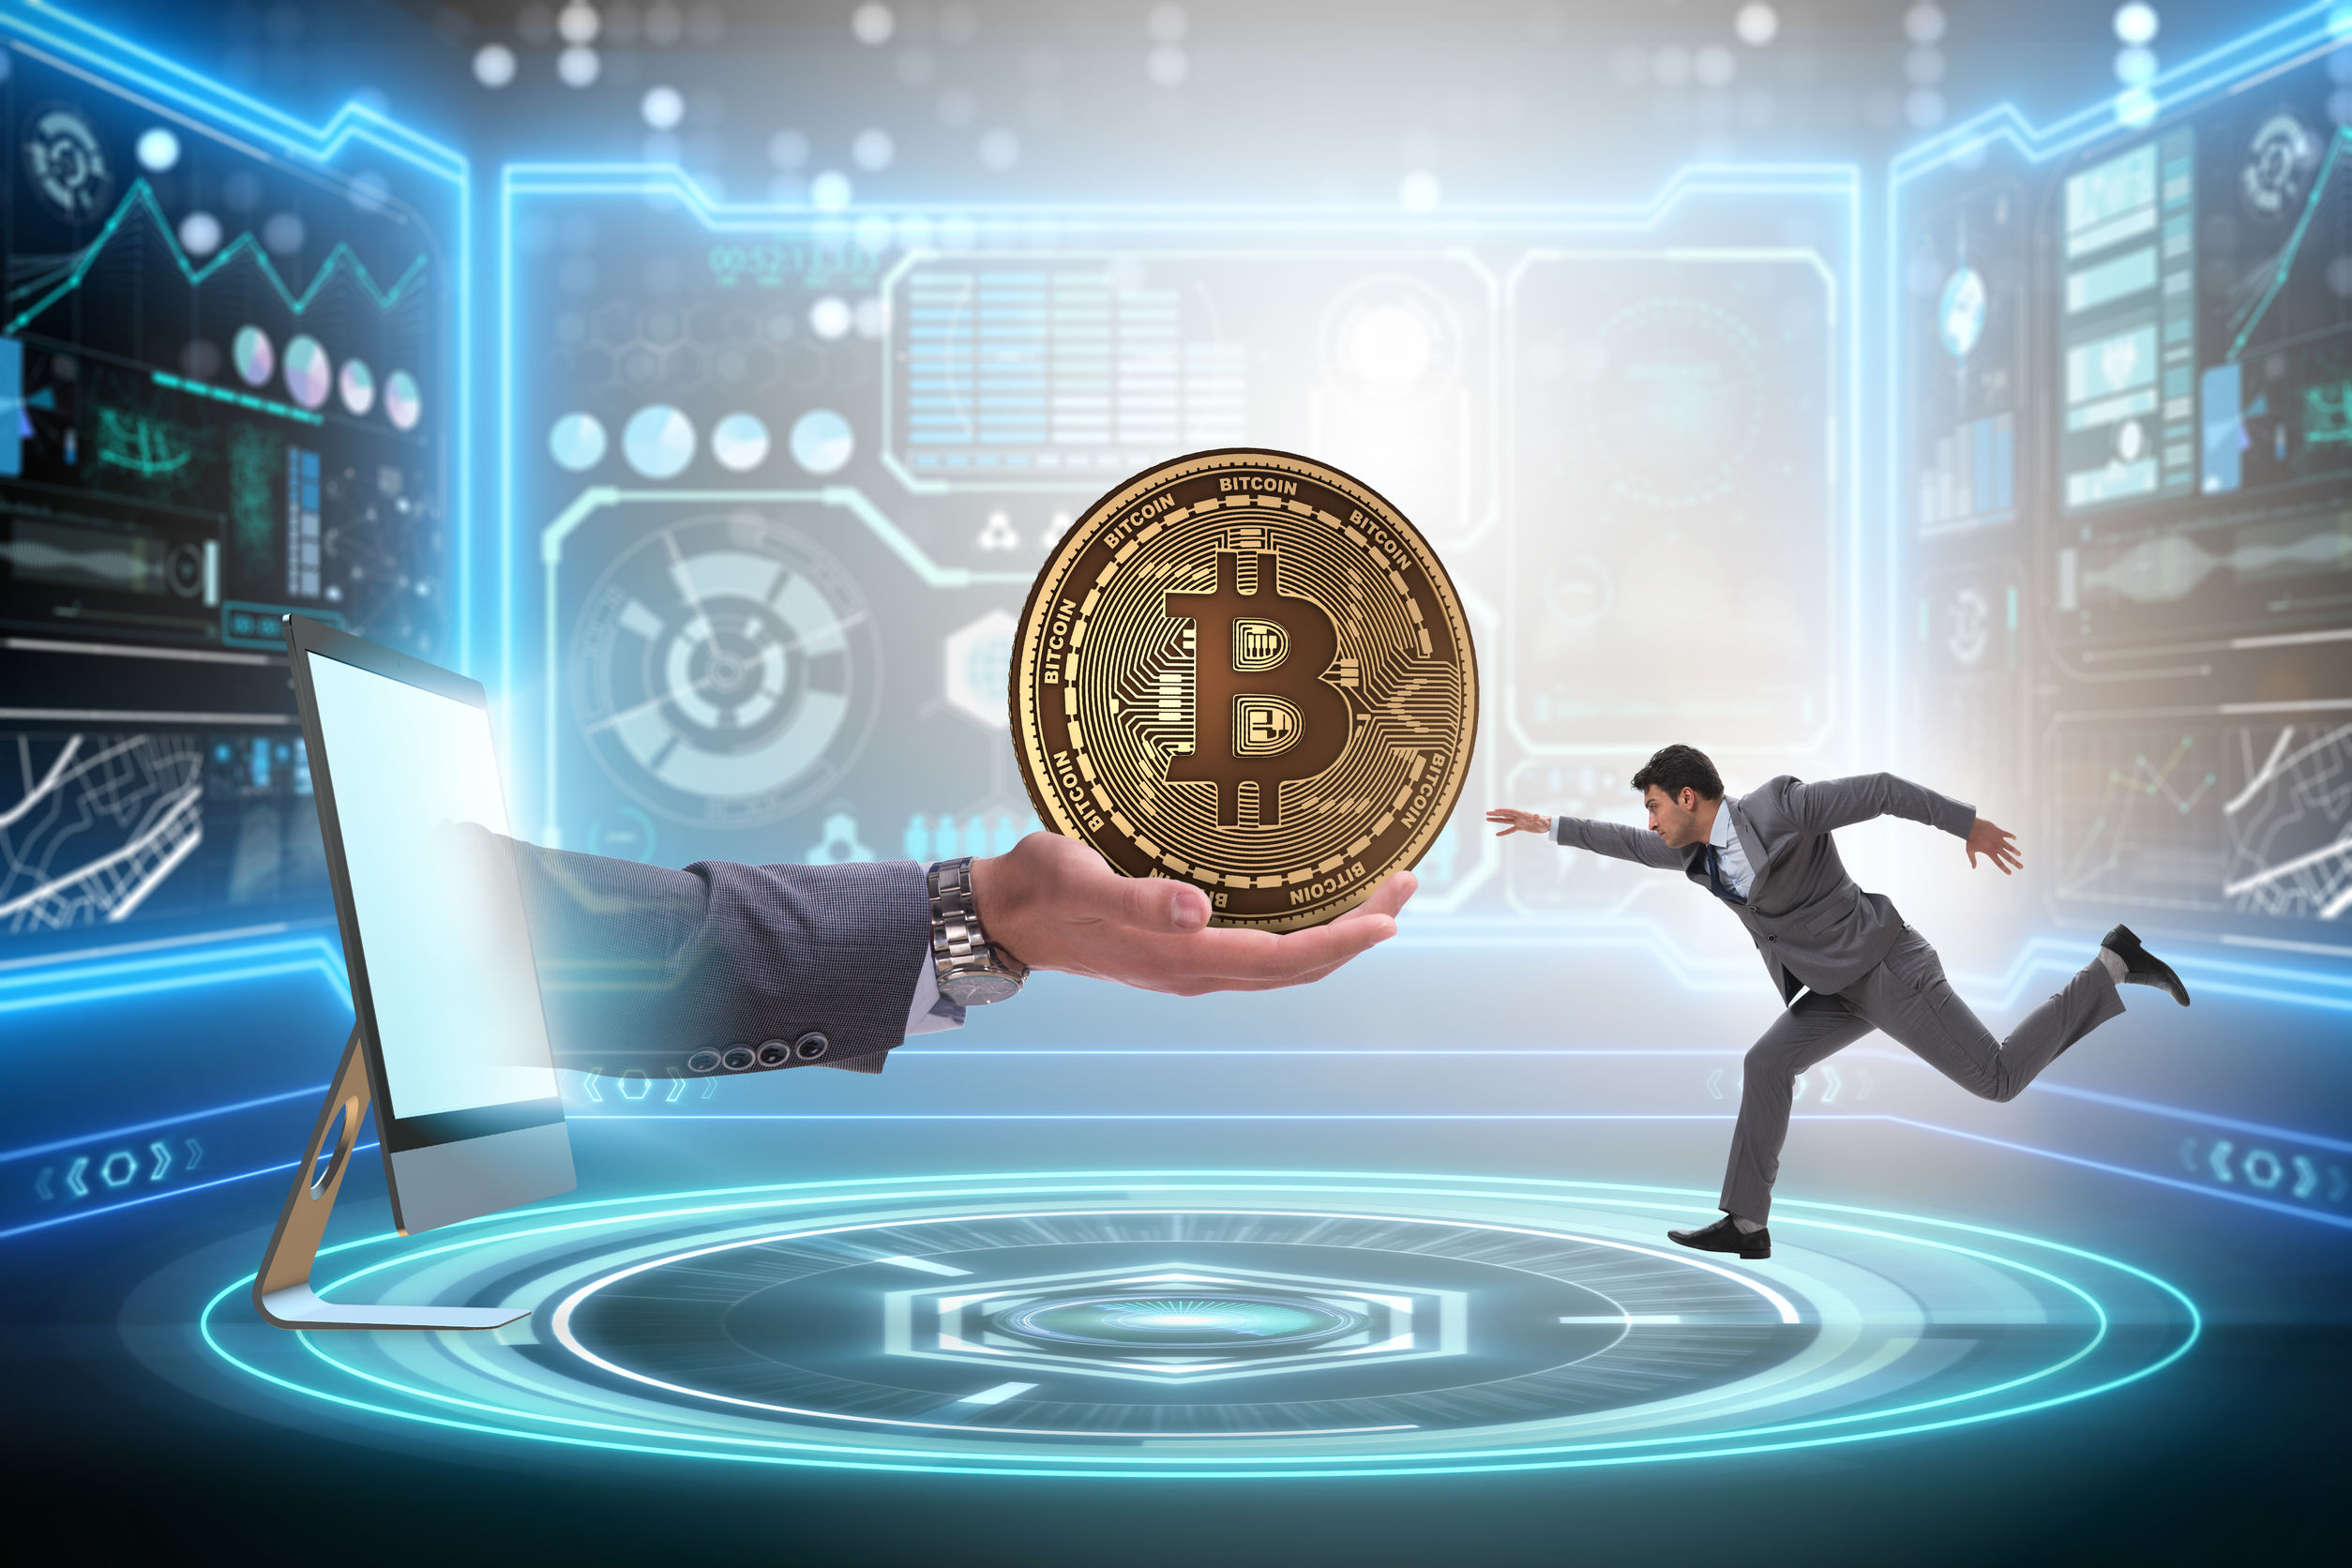 Galaxy Digital CEO Mike Novogratz Says Bitcoin Has Hit The Bottom